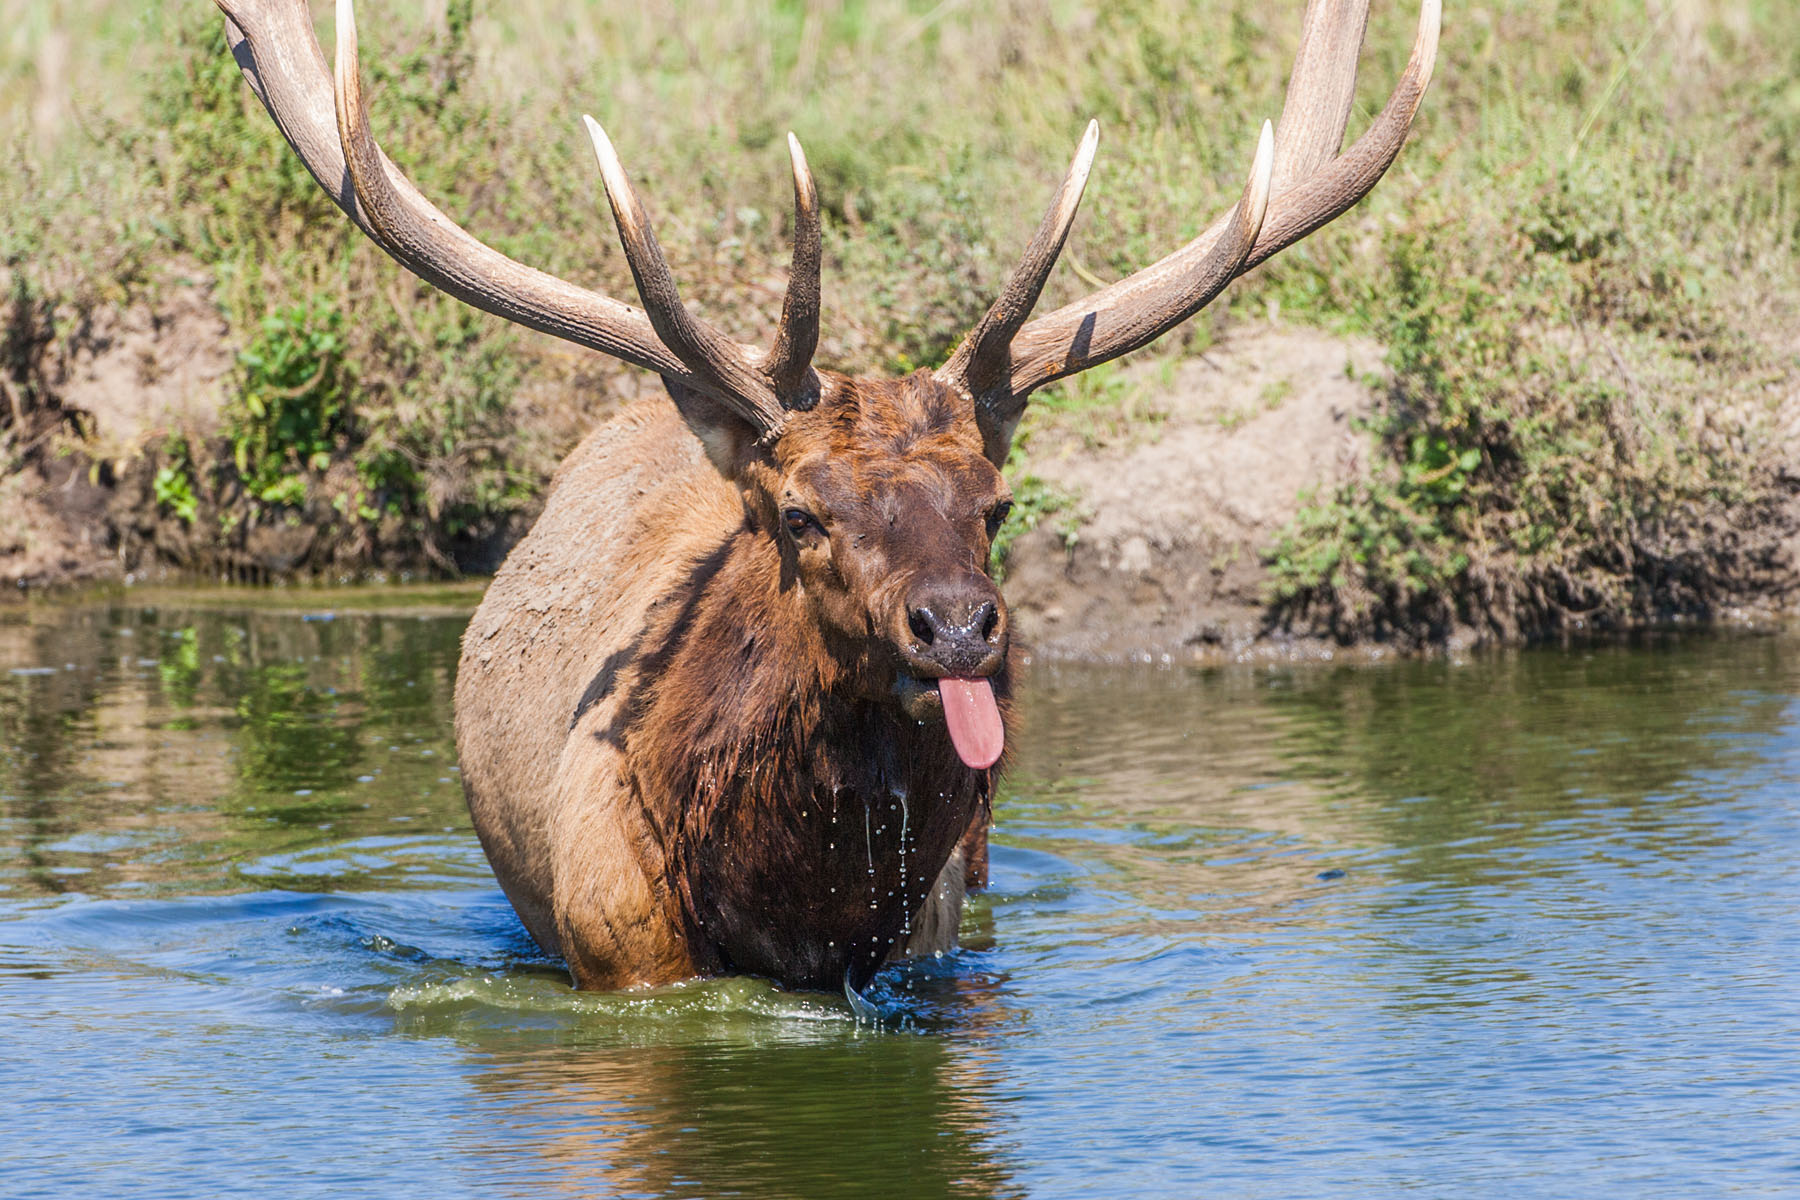 Elk being rude, Simmons Wildlife Safari, Nebraska.  Click for next photo.